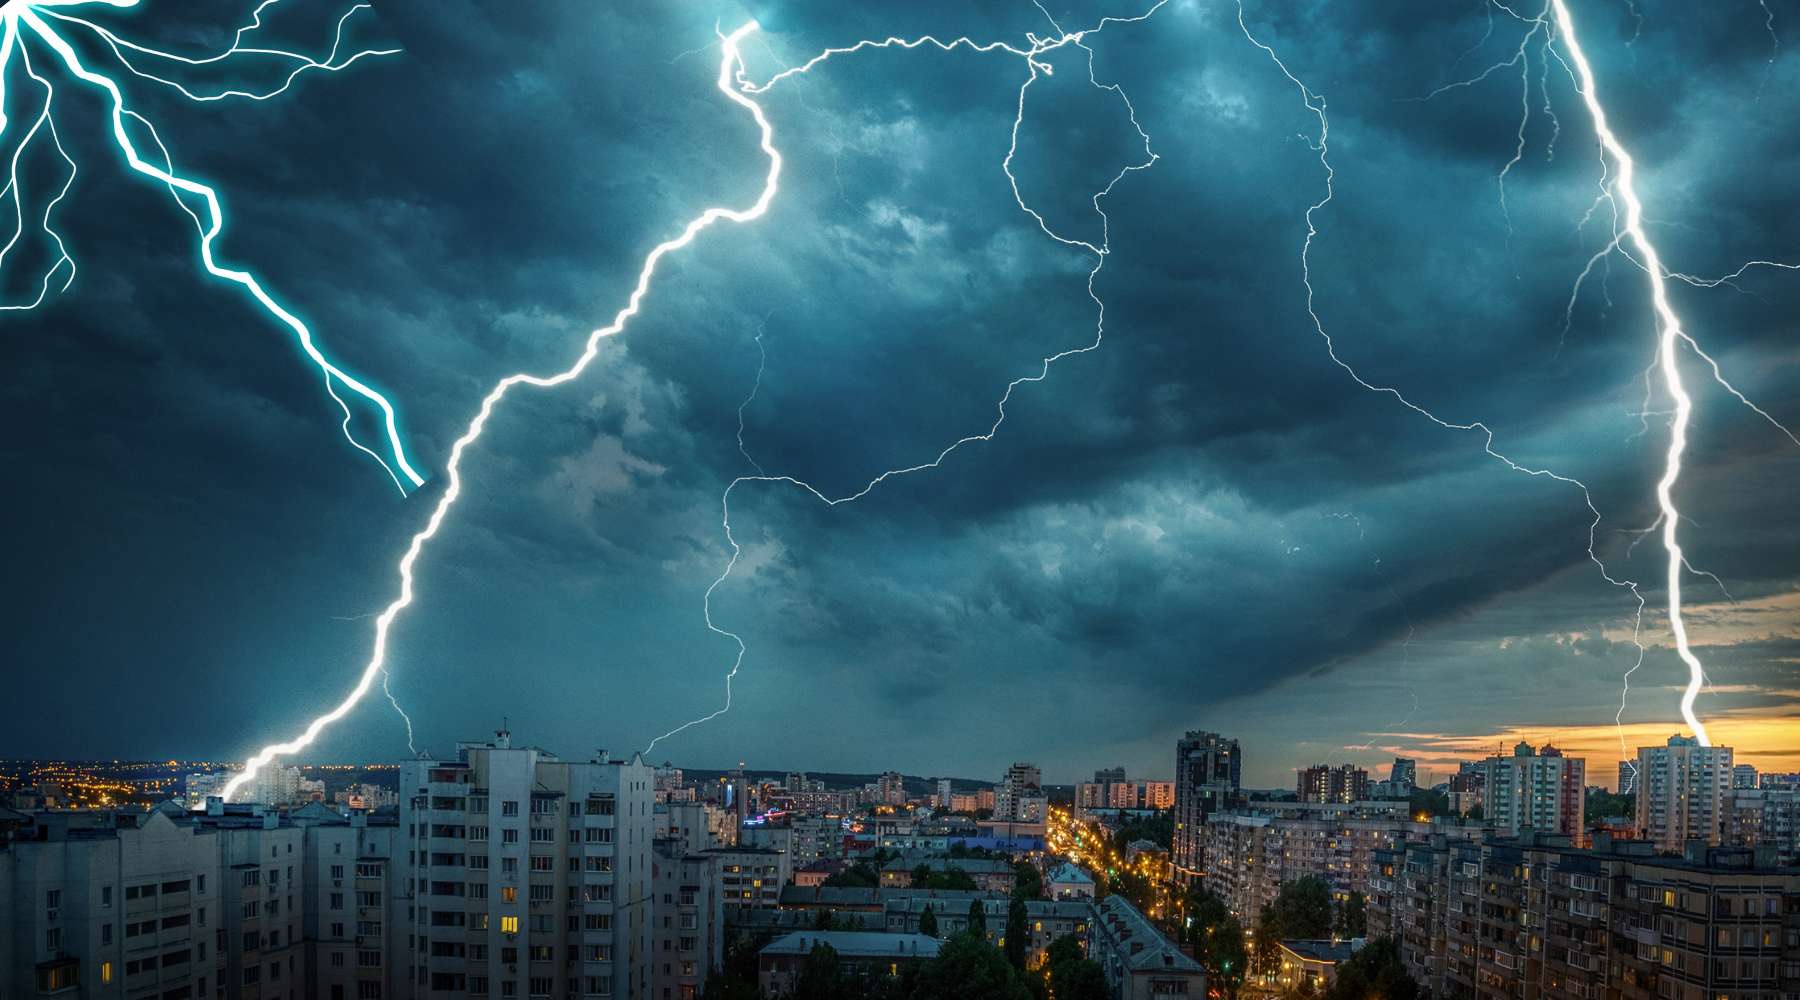 Lightning Storm over City